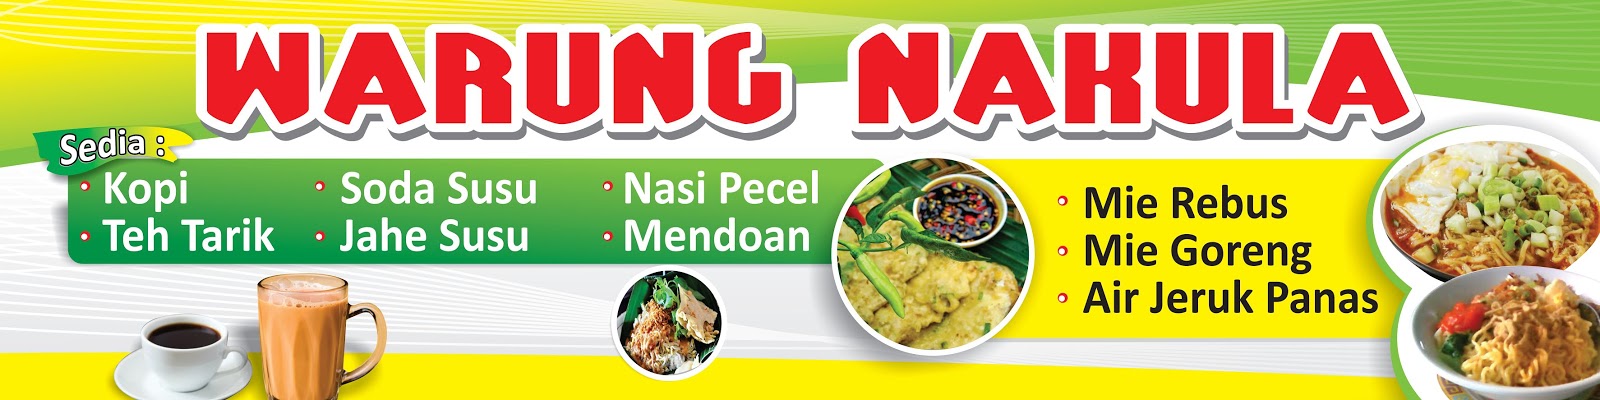 Spanduk Warung Makan Nakula - Agen87